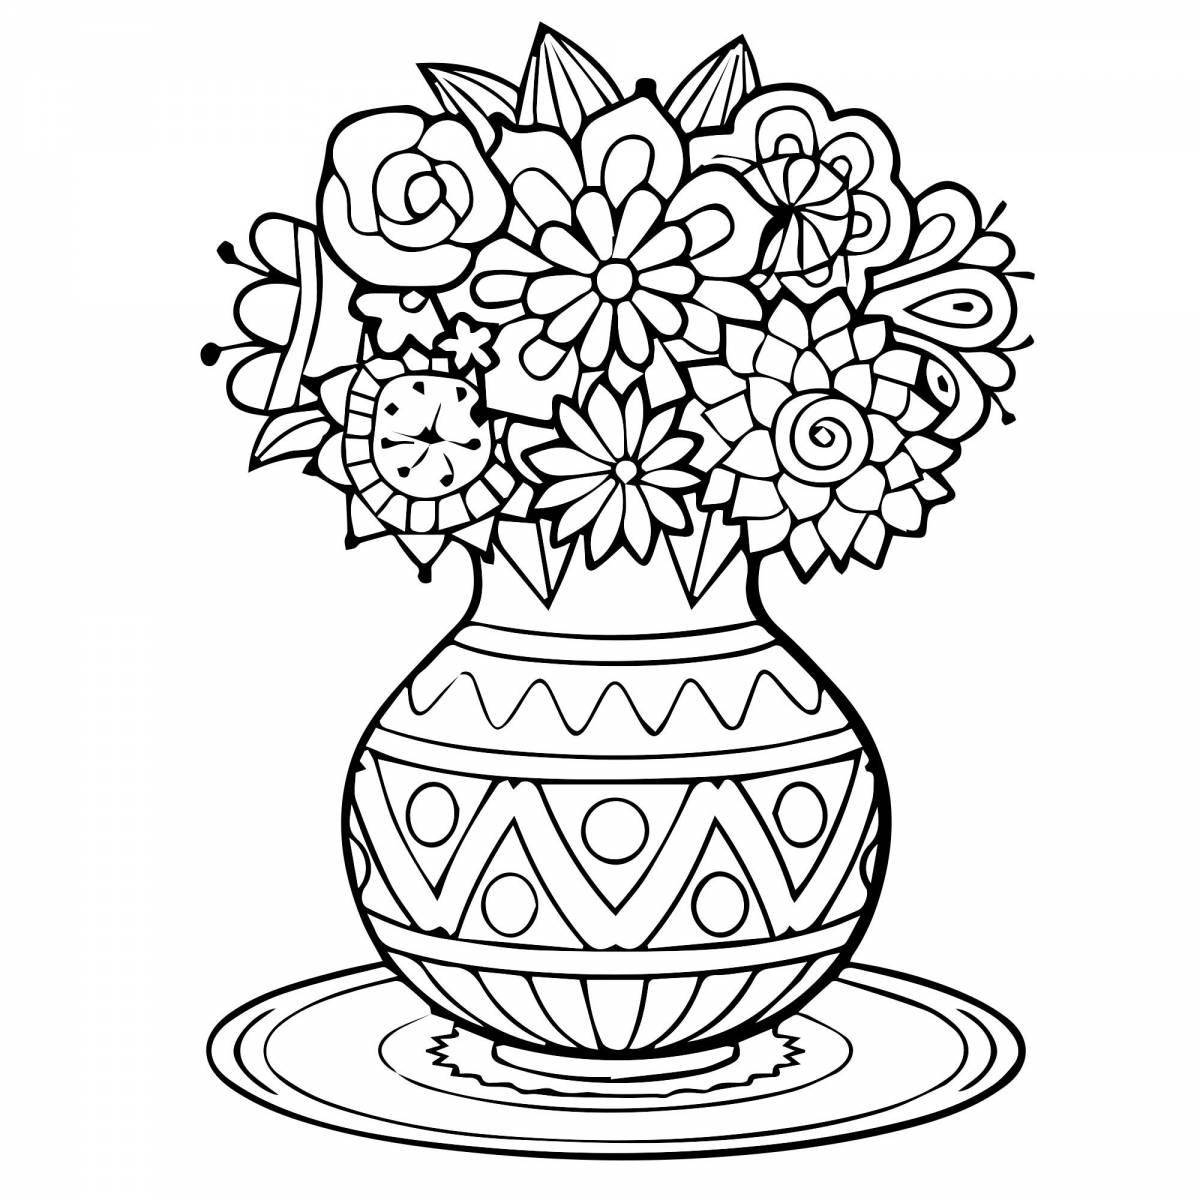 Яркая раскраска цветы в вазе для малышей